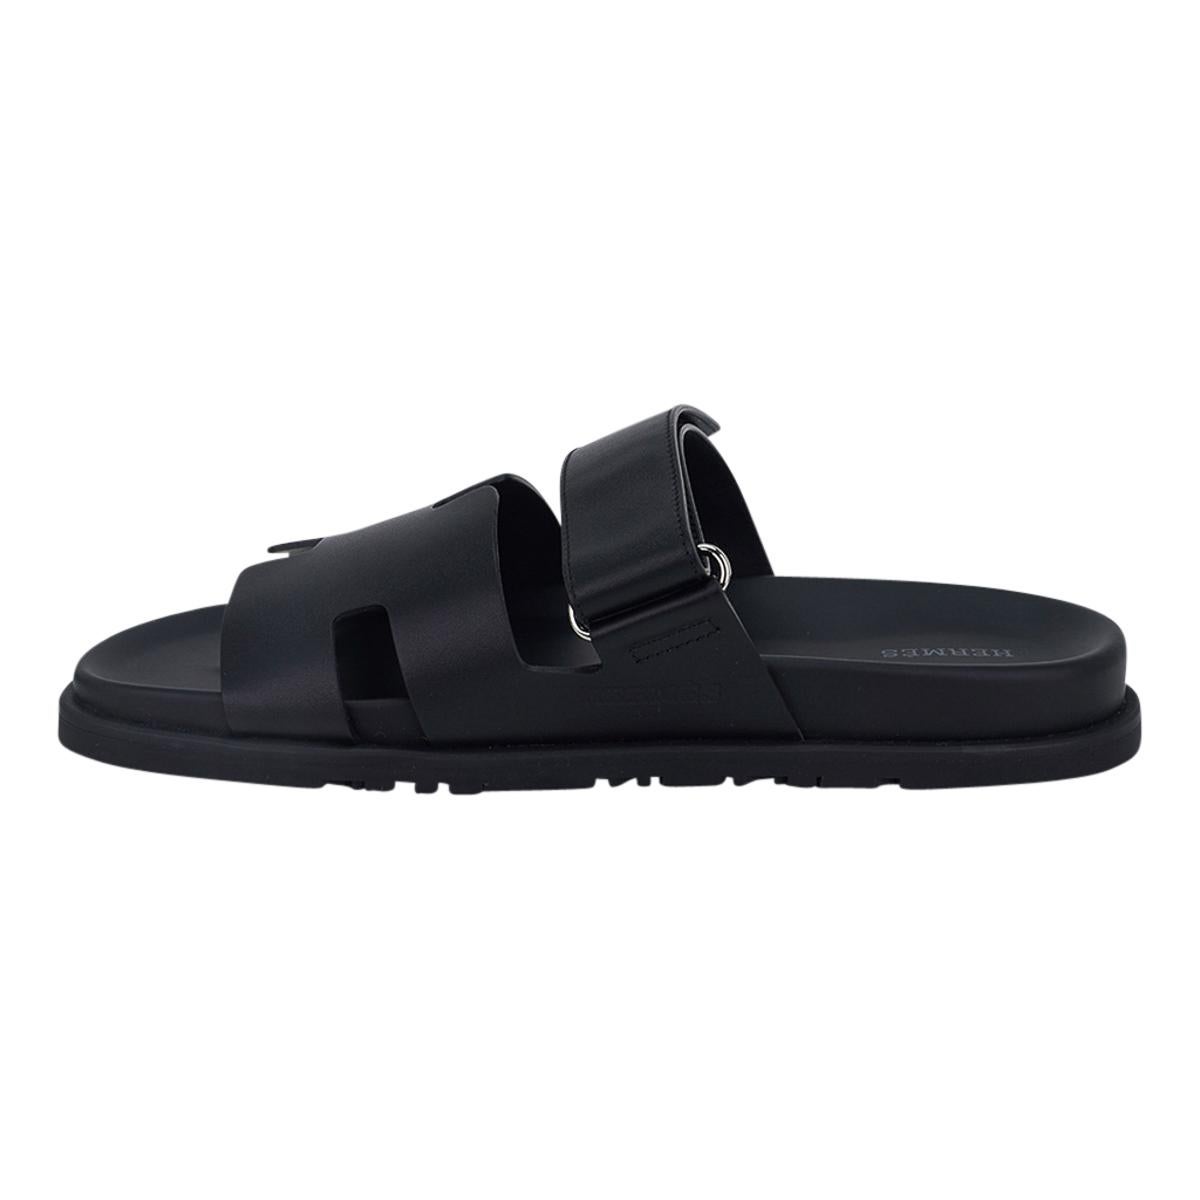 Hermes Men's Chypre Black Calfskin Leather Sandal 43.5 1